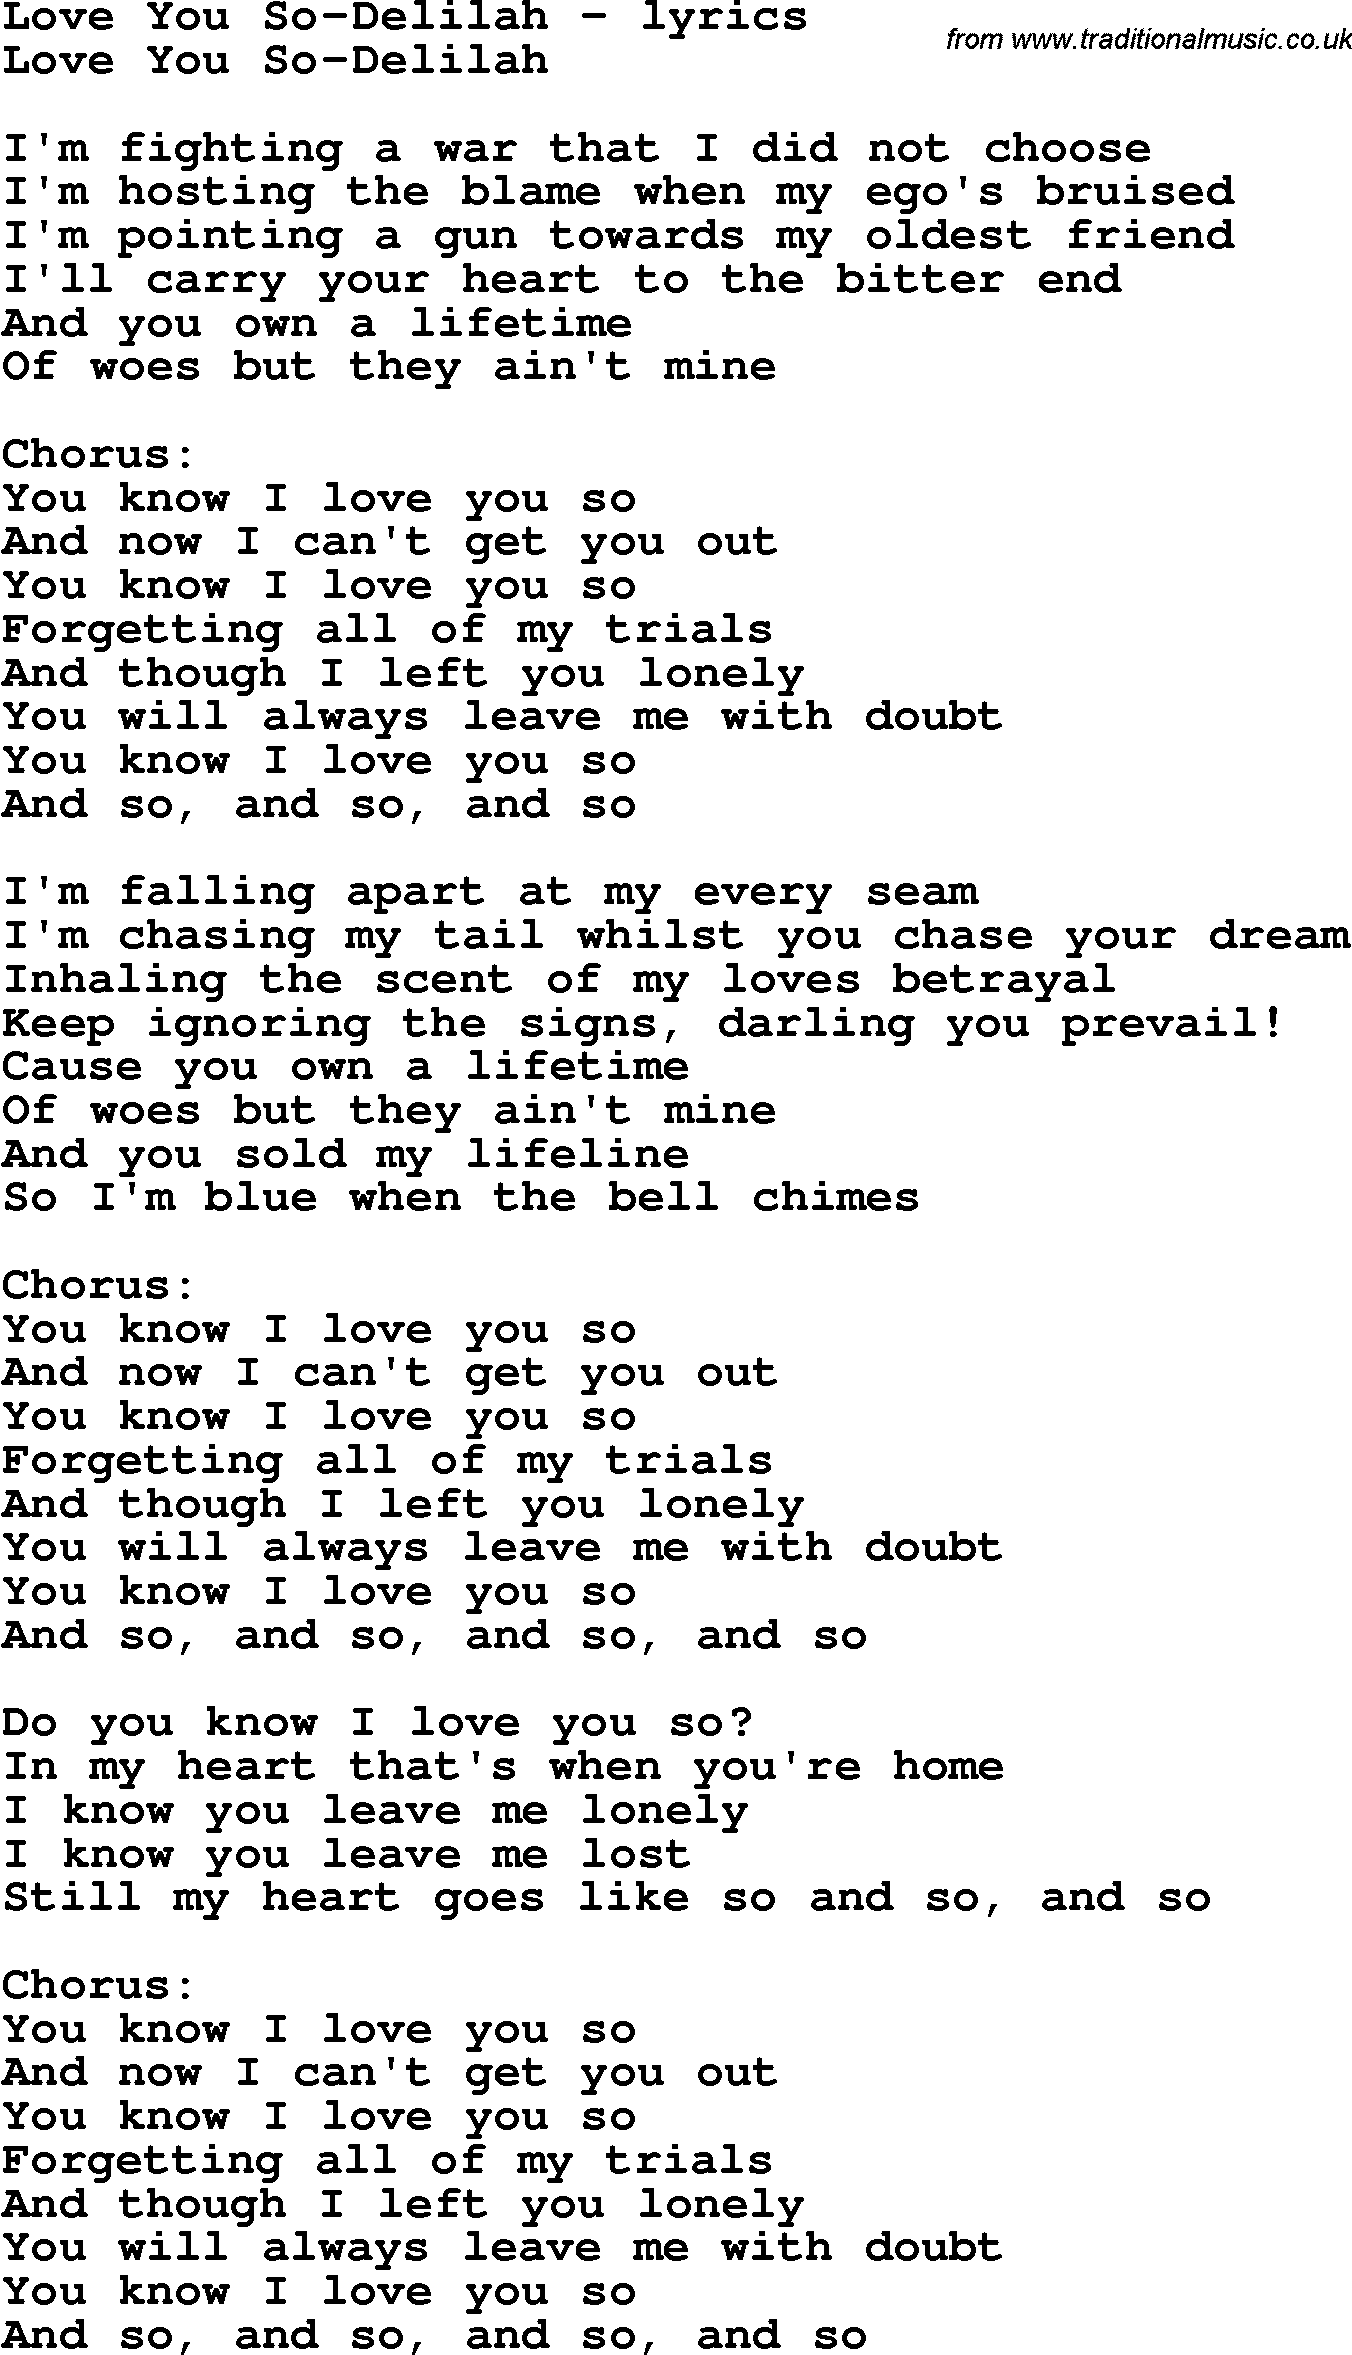 Love Song Lyrics for: Love You So-Delilah